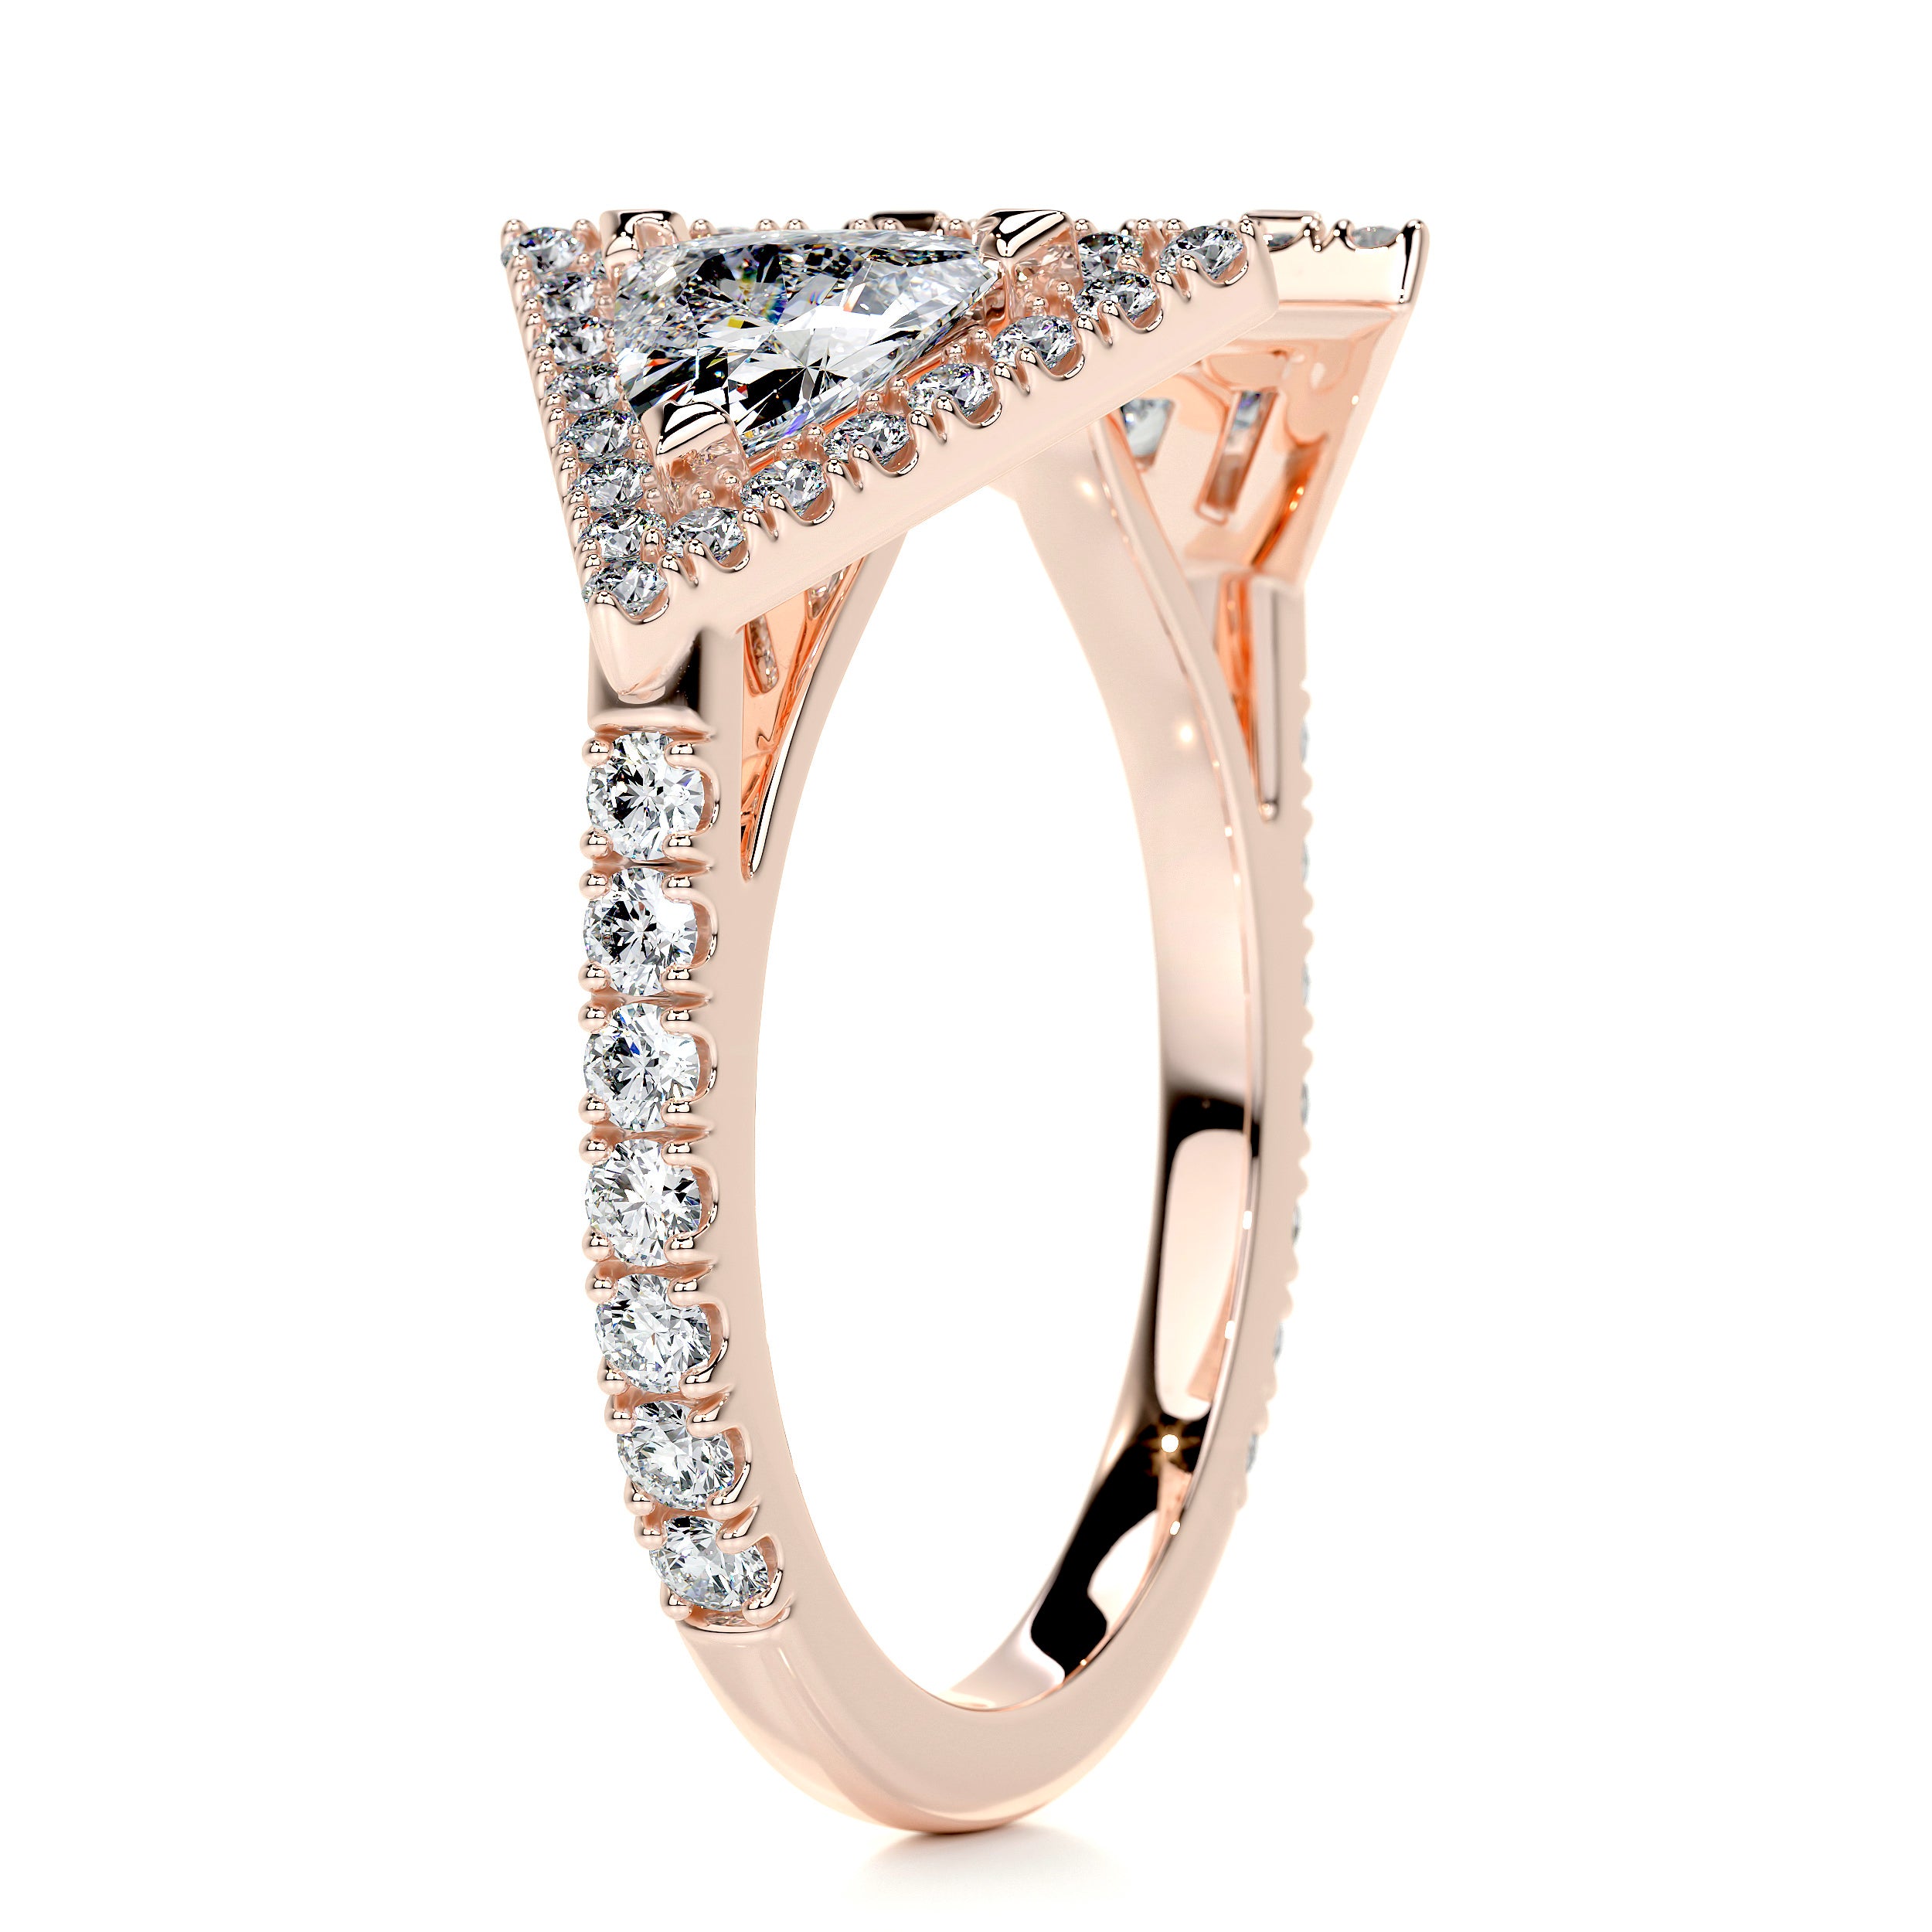 Olivia Fashion Diamond Ring   (1 carat) -14K Rose Gold